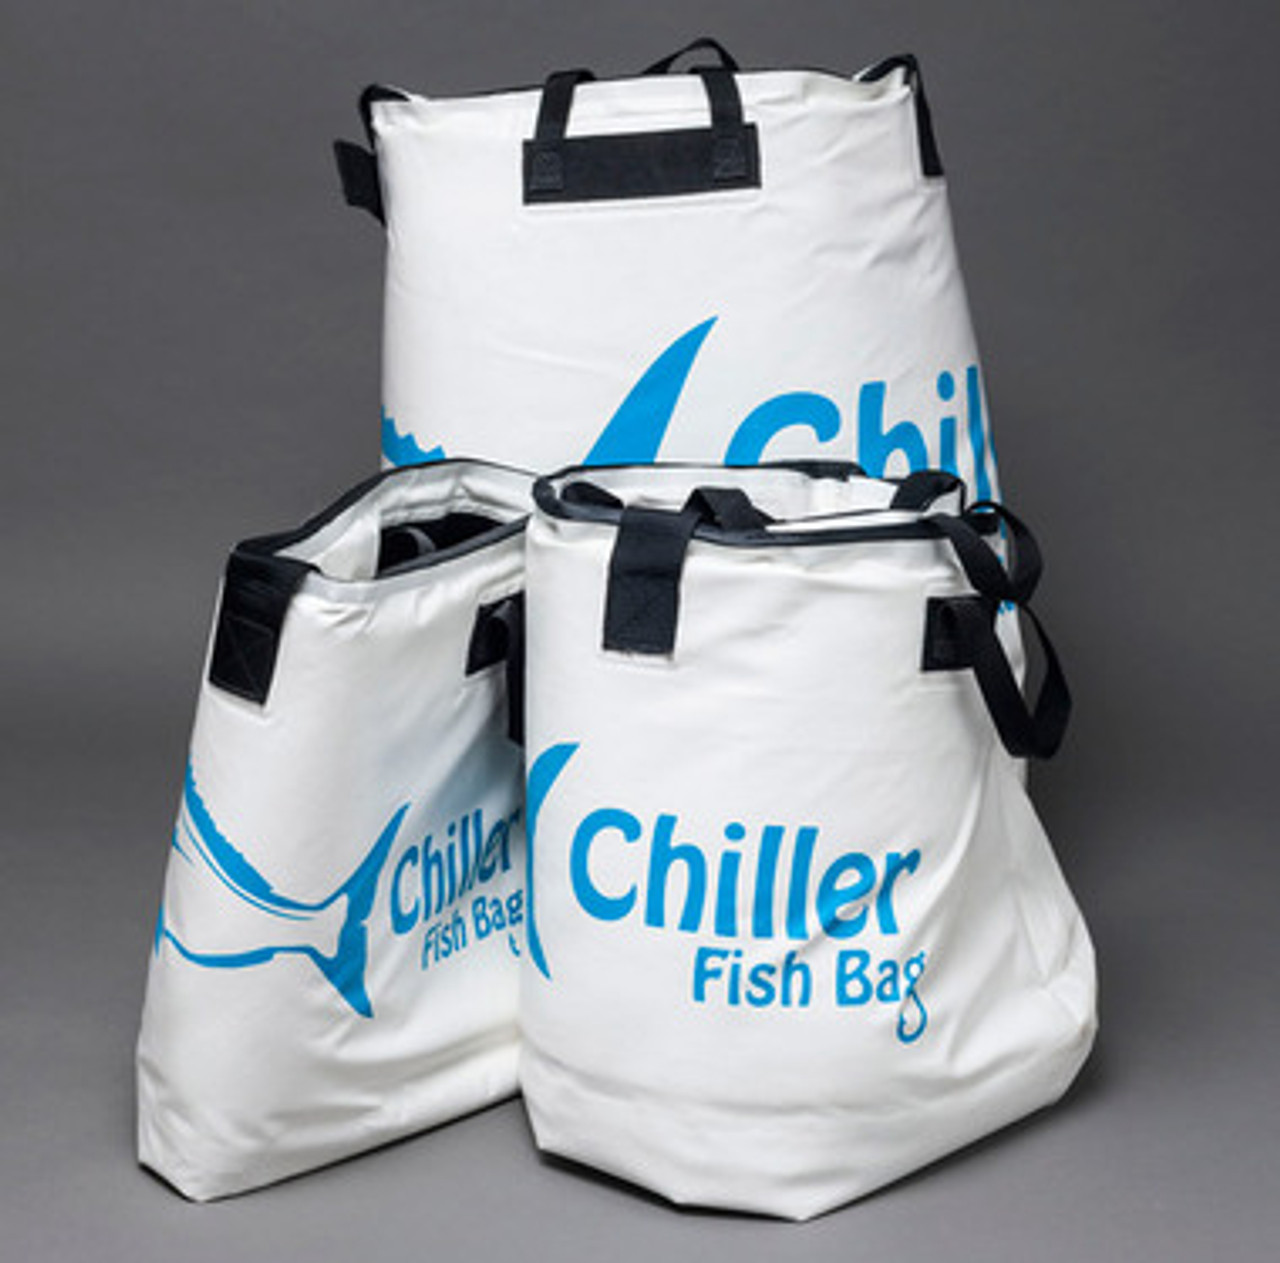 fish kill chiller bag, tuna bag Best Deal